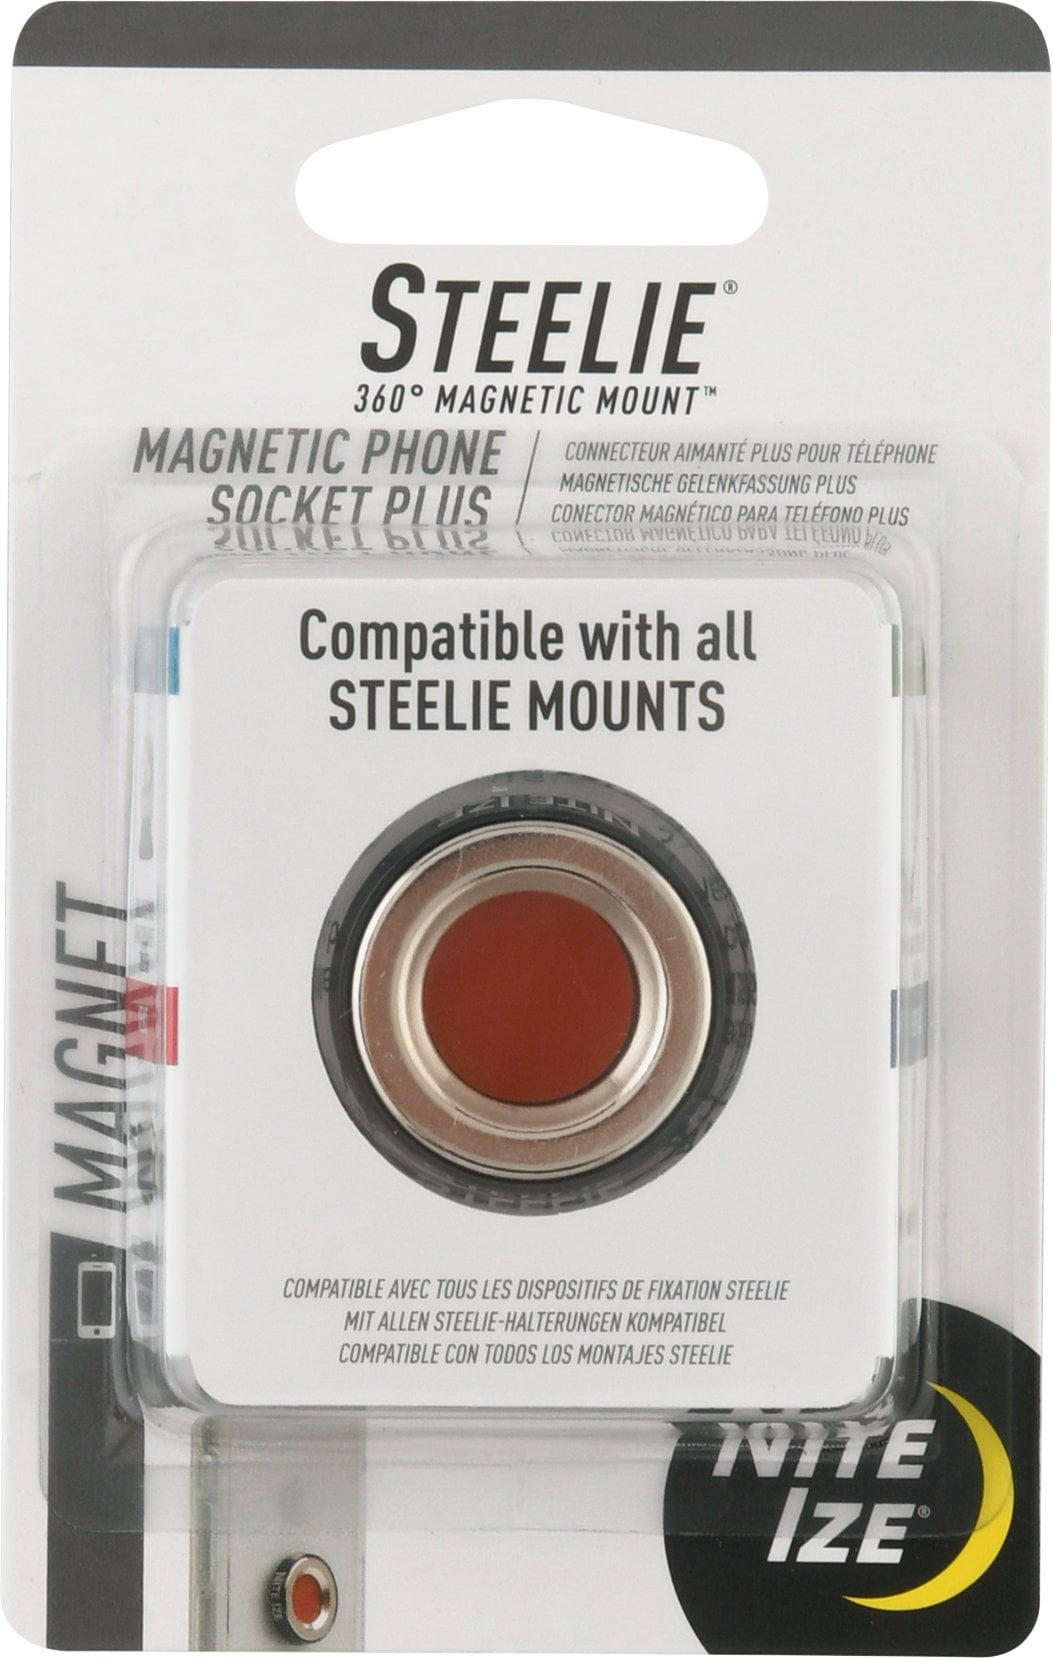 Nite Ize Steelie Magnetic Phone Socket Plus STHDM-11-R7 - The Home